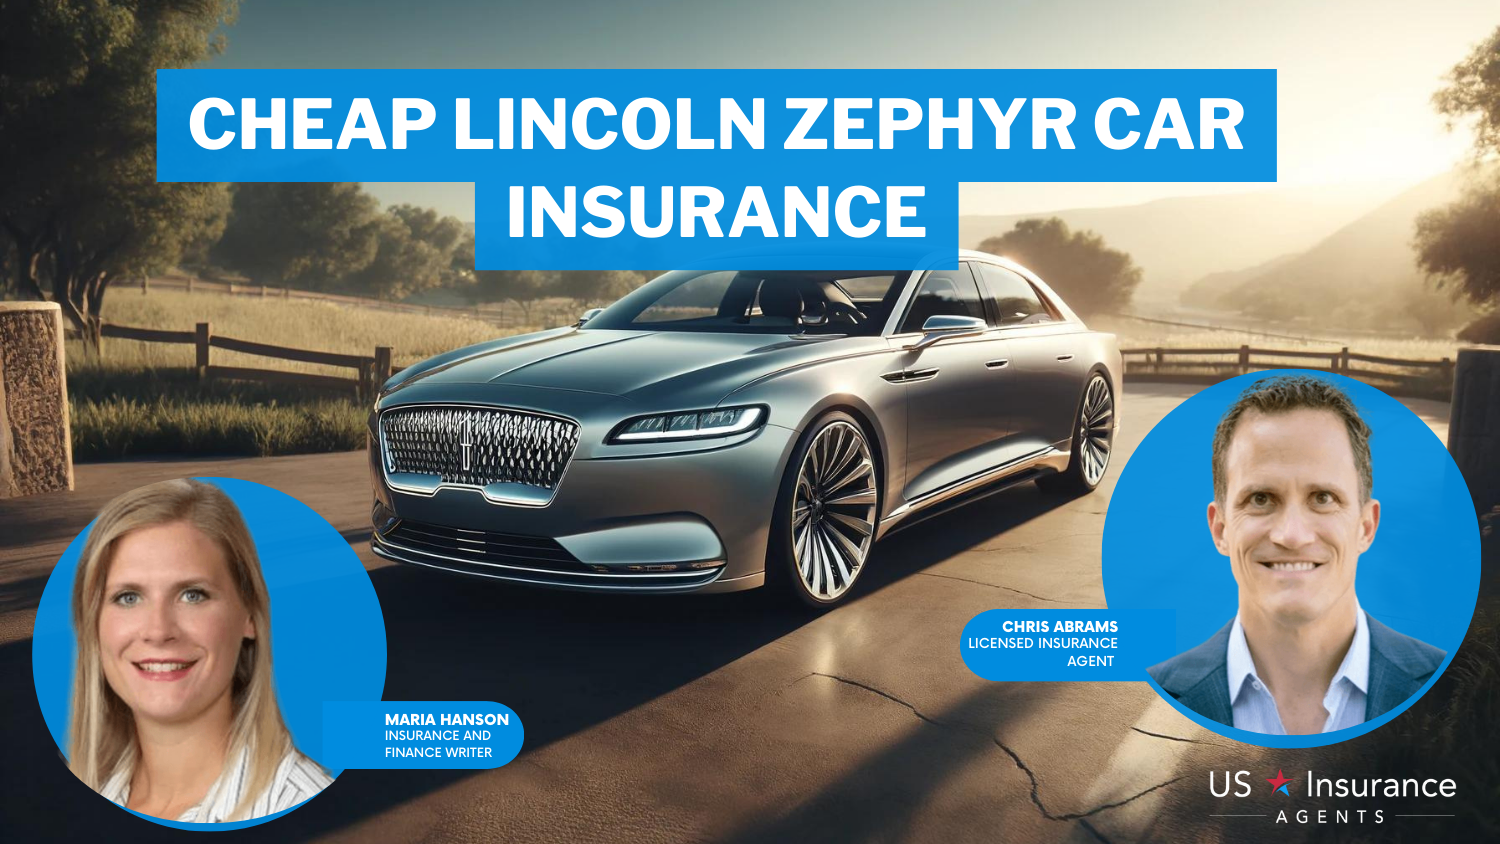 Cheap Lincoln Zephyr Car Insurance: State Farm, Progressive, and Mercury